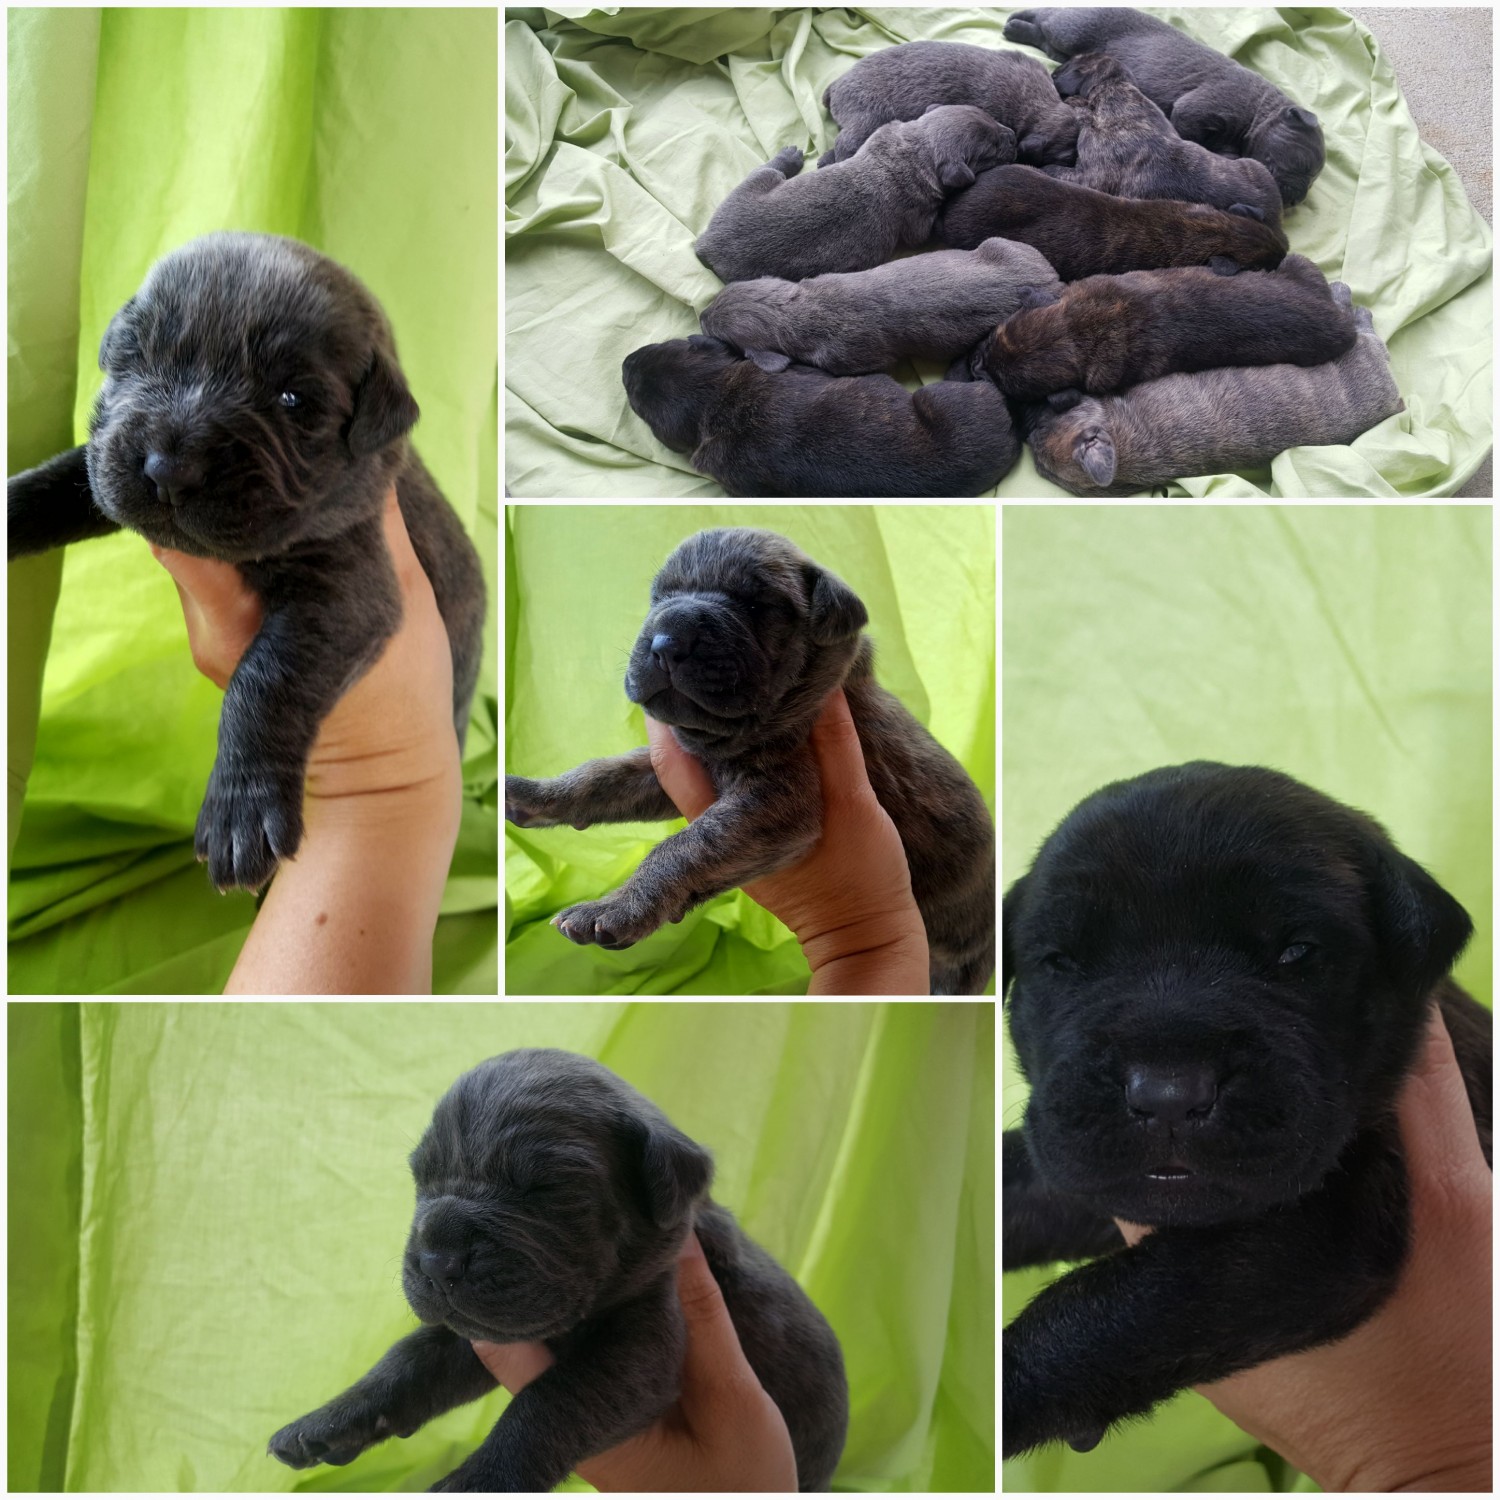 Cane Corso Puppies For Sale In Ky l2sanpiero